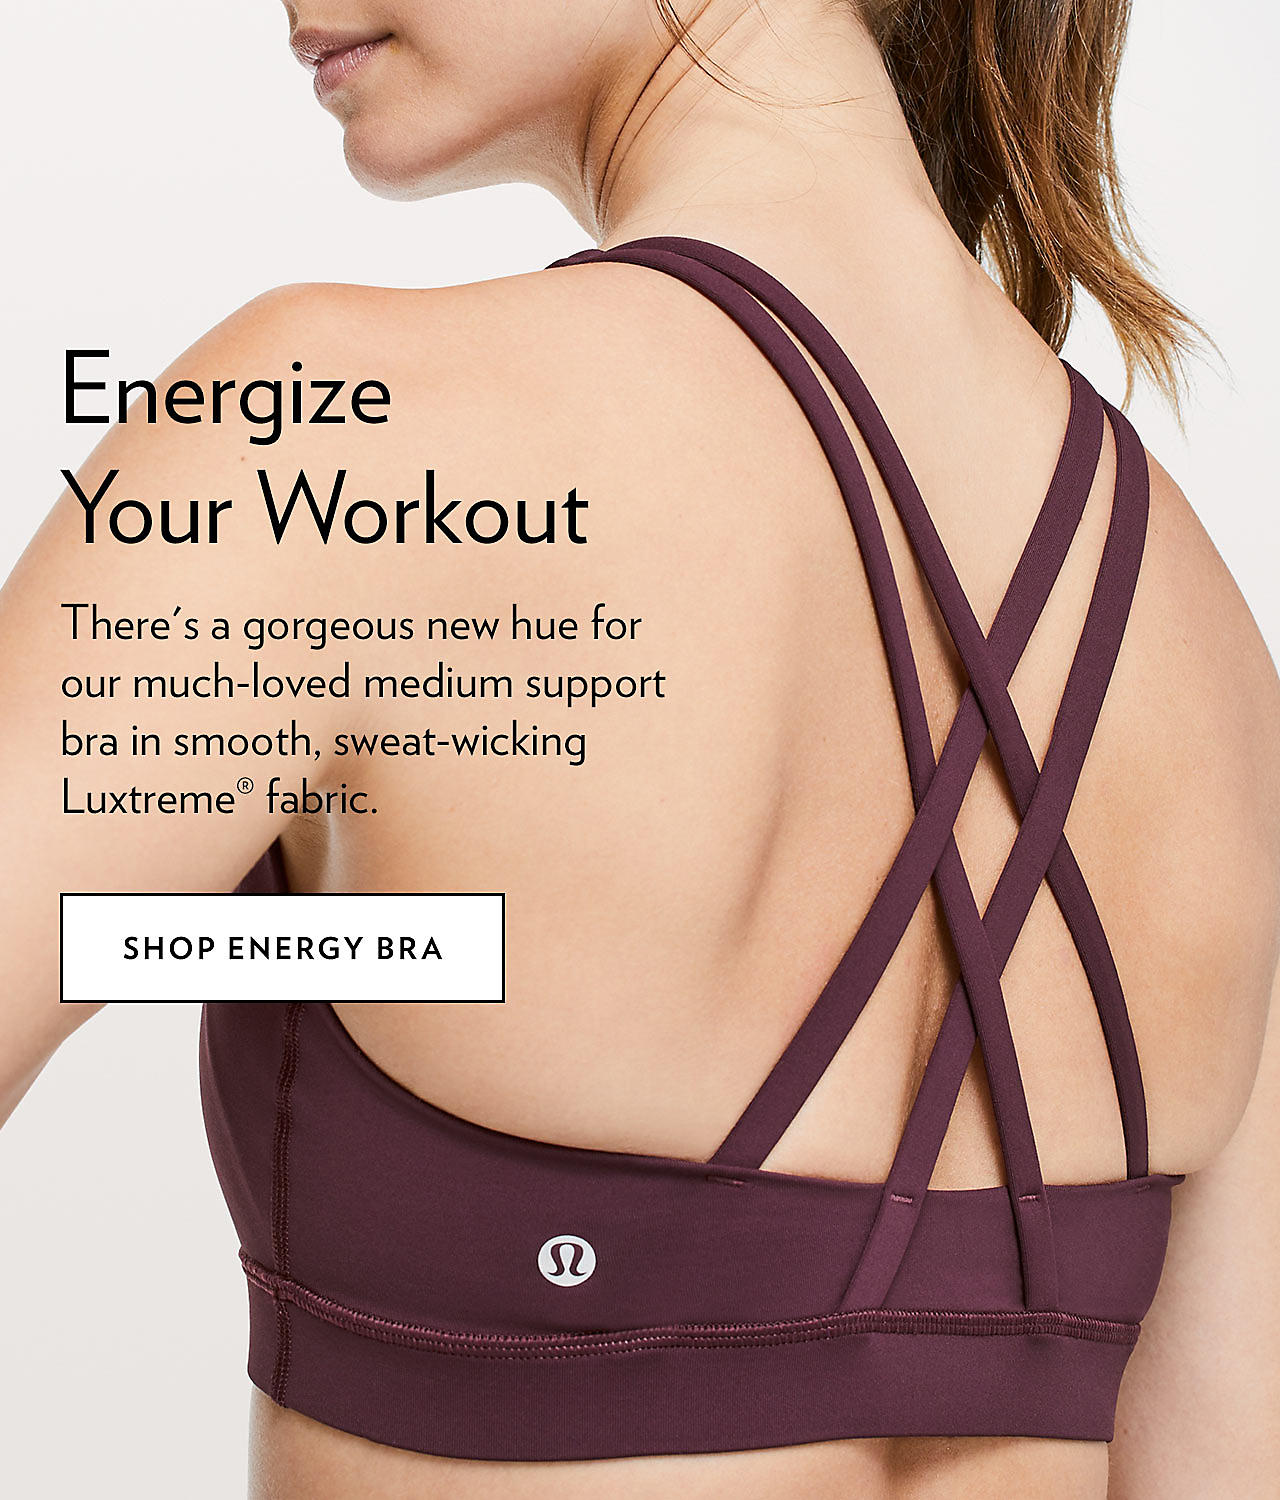 Energize Your Workout - SHOP ENERGY BRA